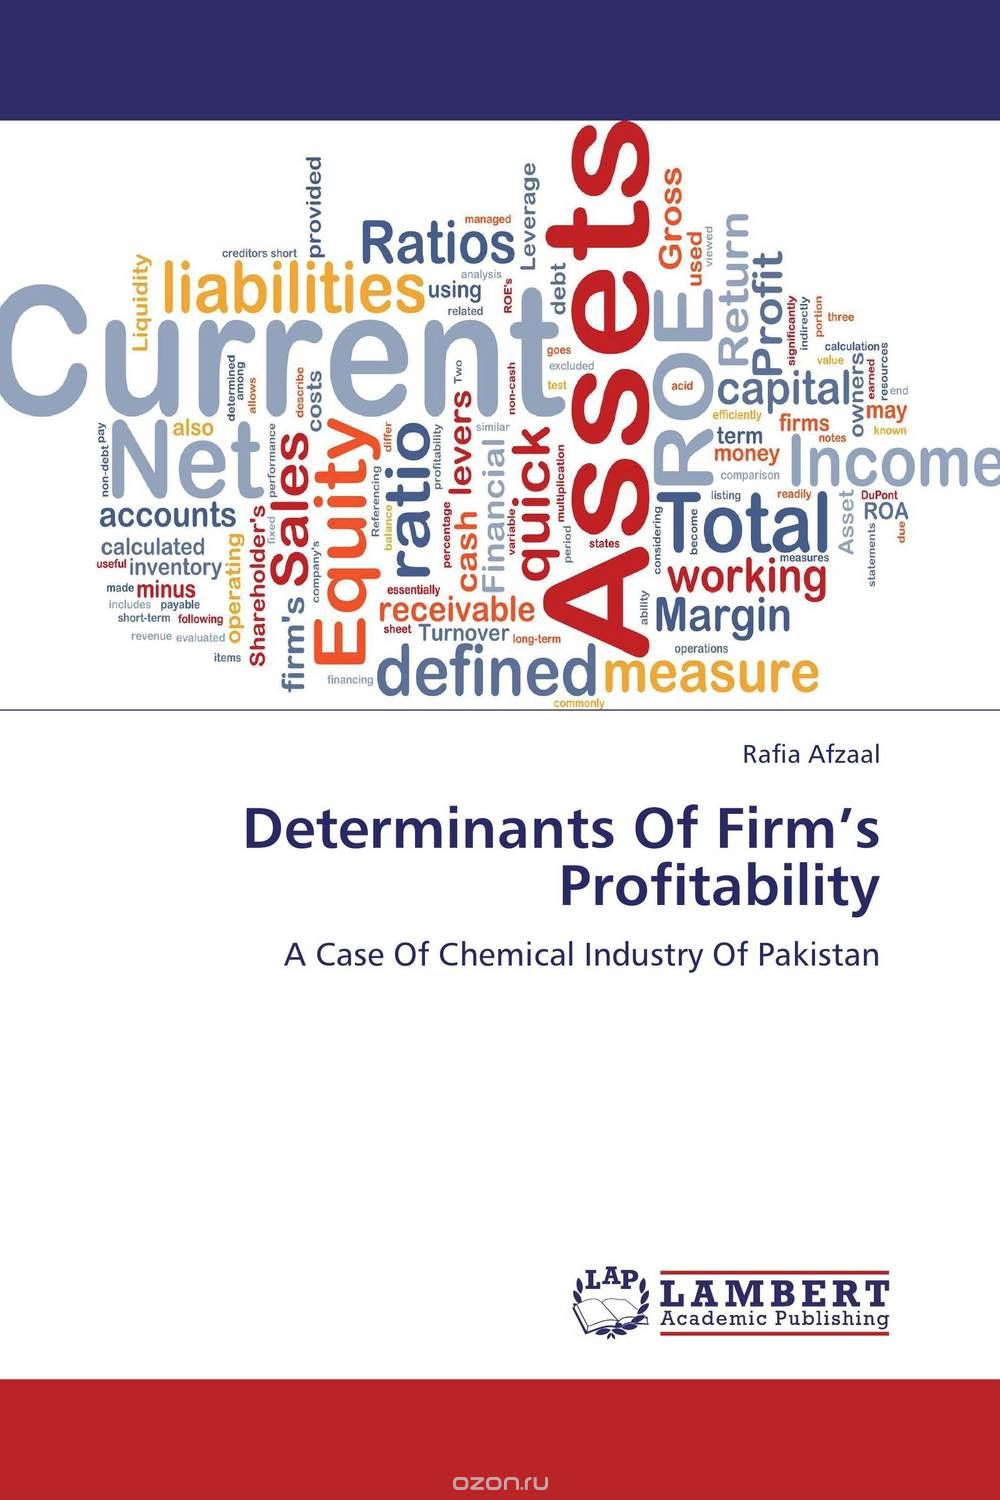 Скачать книгу "Determinants Of Firm’s Profitability"